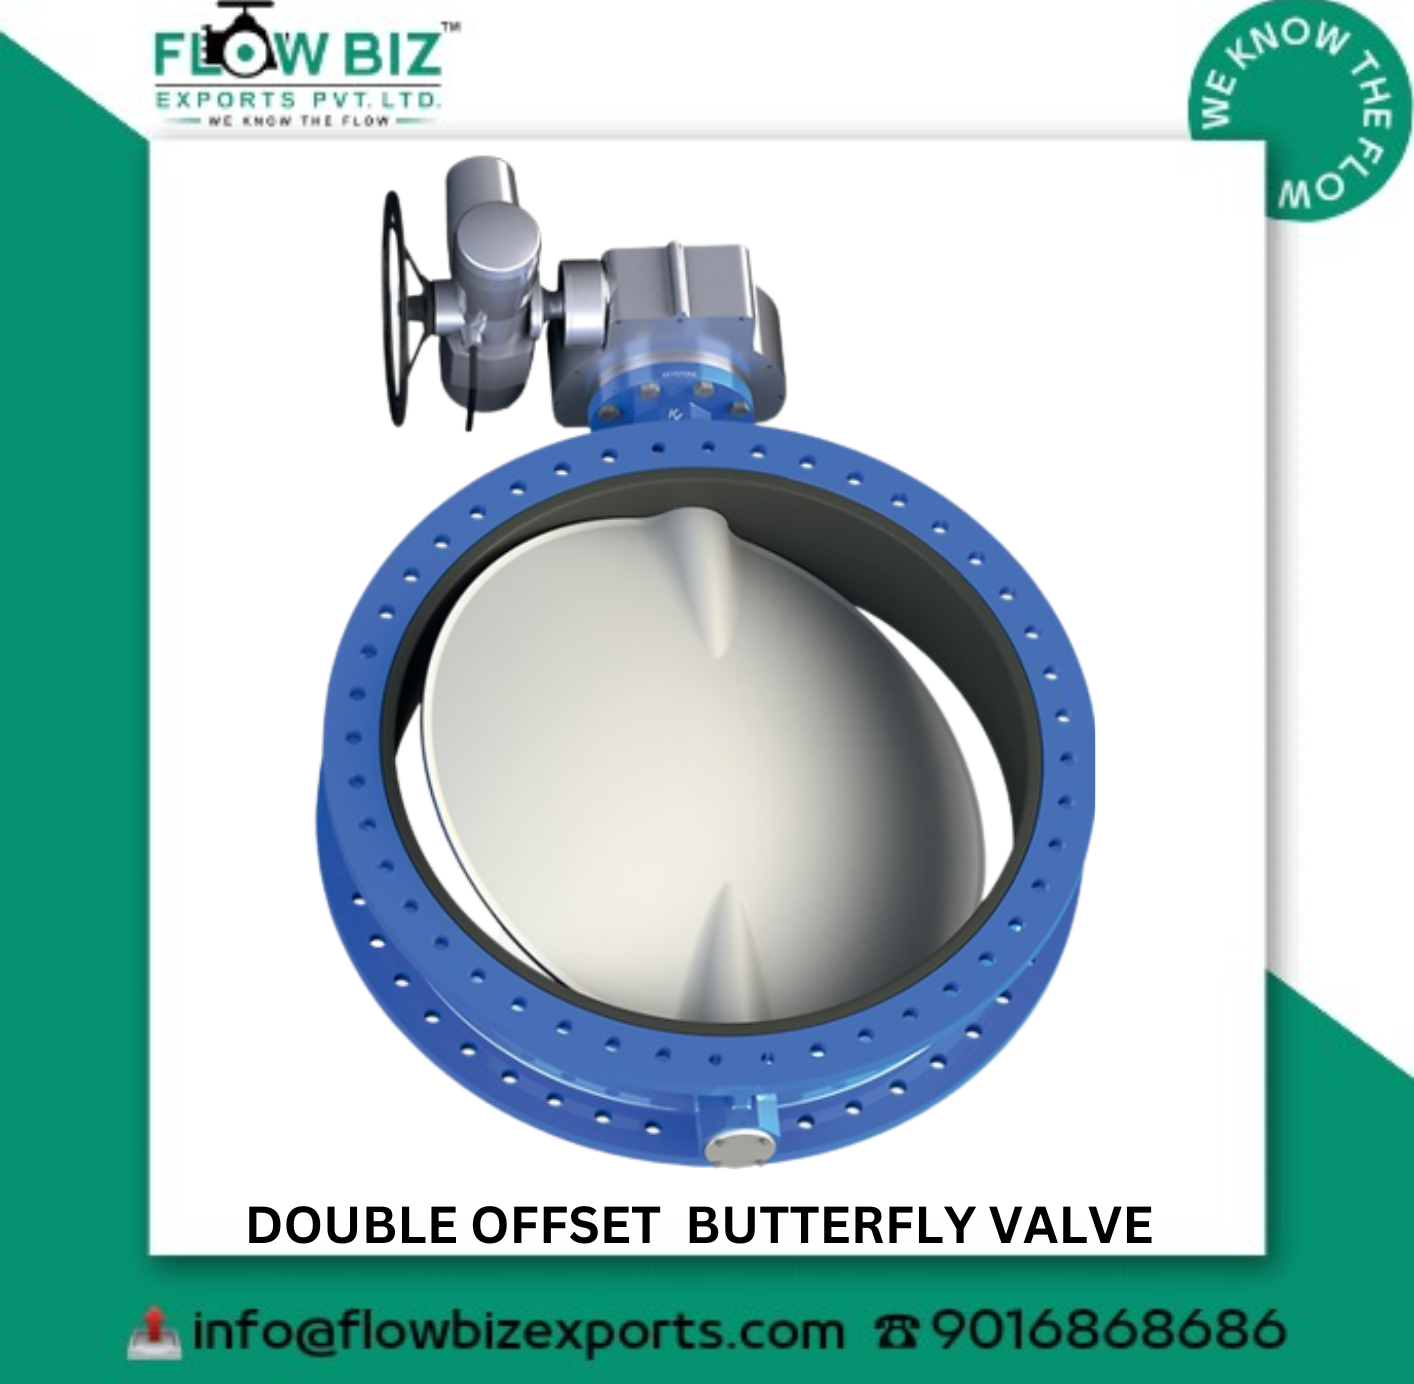 double offset butterfly valve manufacturer mumbai - Flowbiz